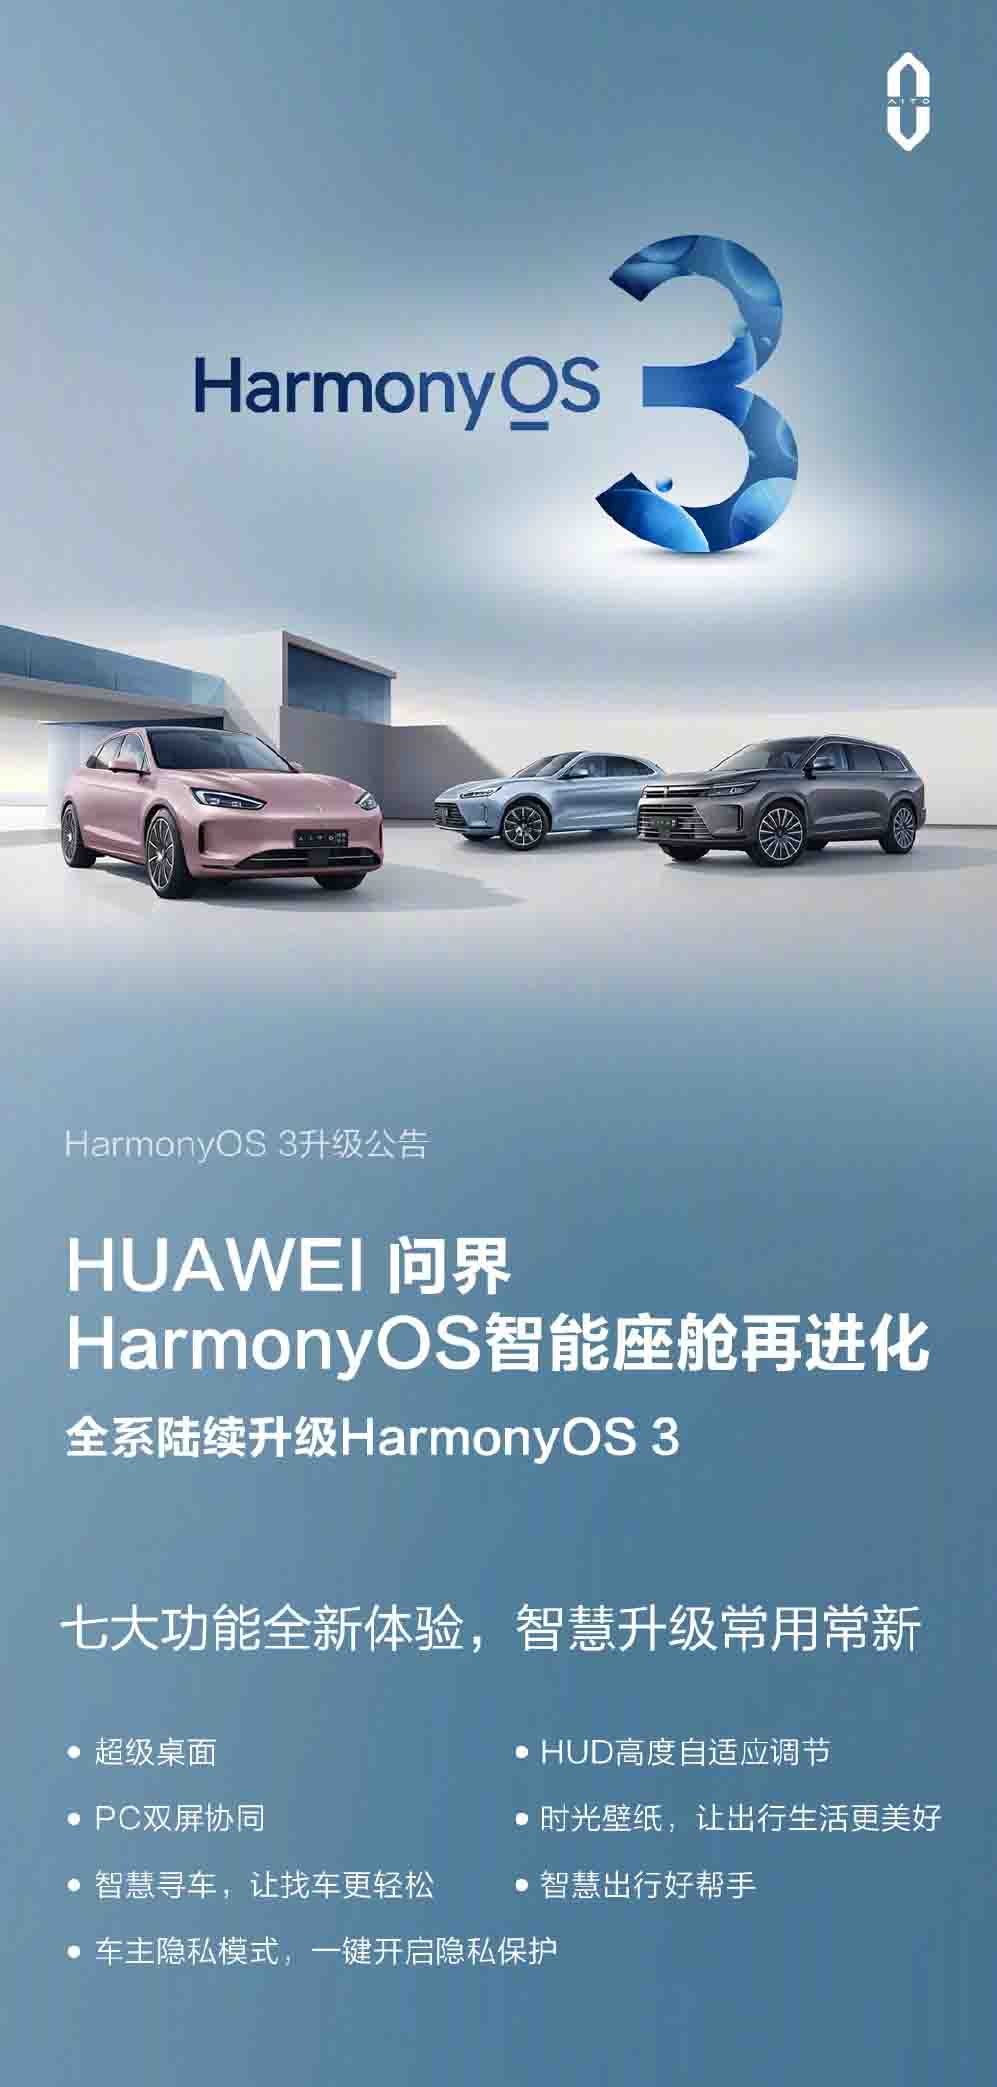 HarmonyOS 3 car features